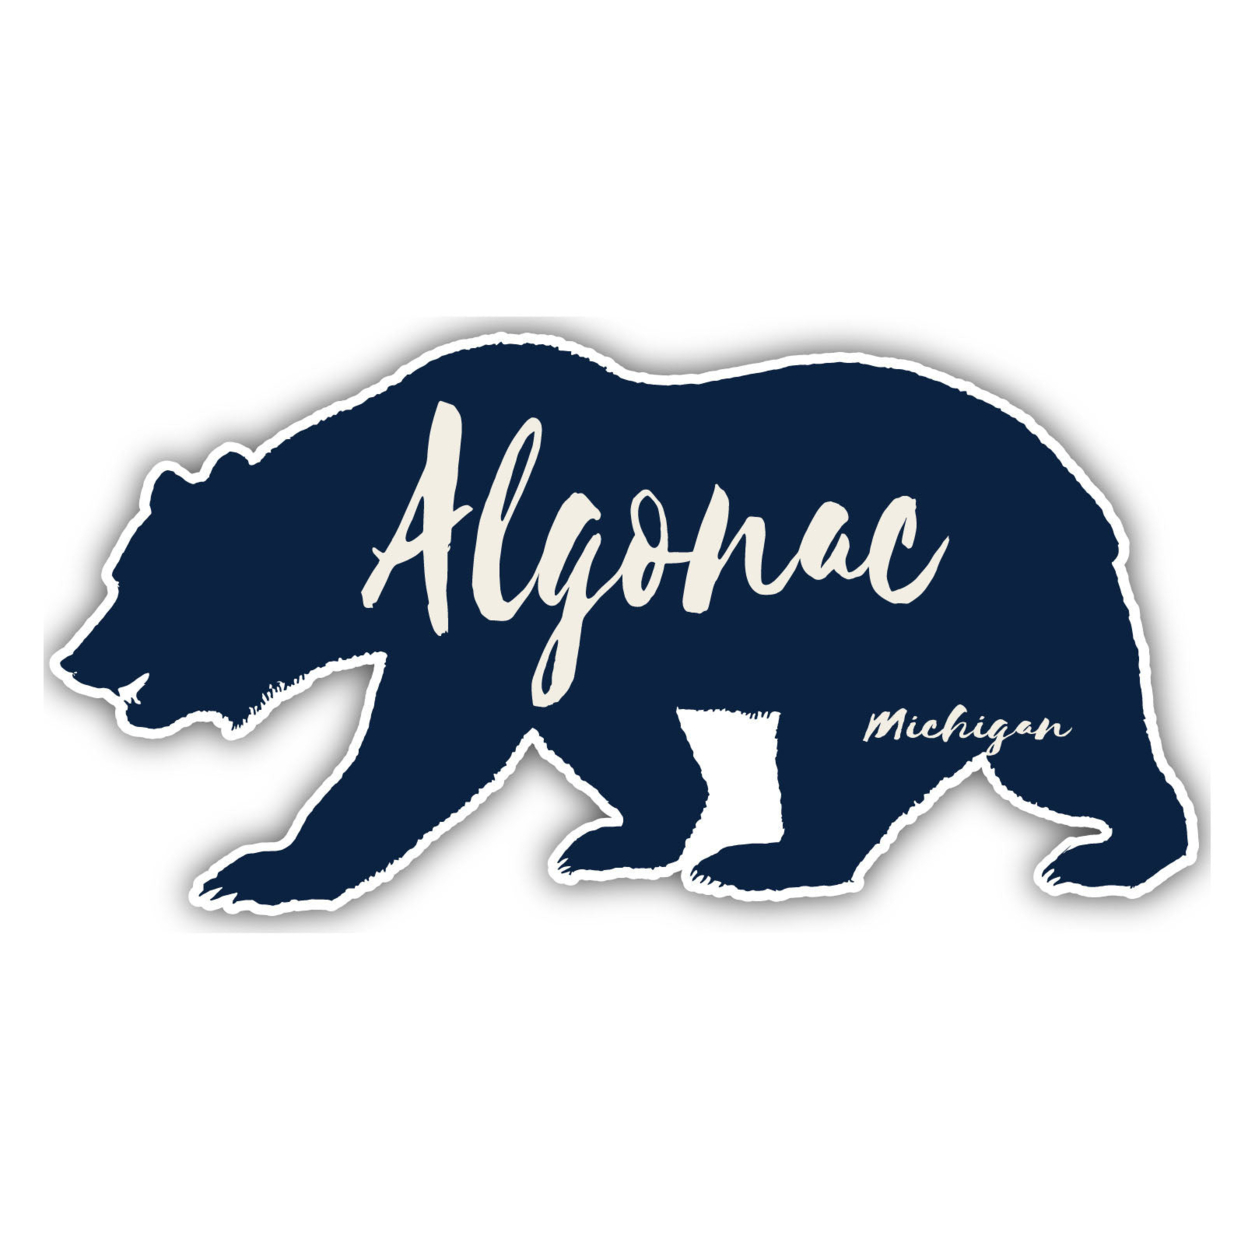 Algonac Michigan Souvenir Decorative Stickers (Choose Theme And Size) - 4-Pack, 2-Inch, Bear